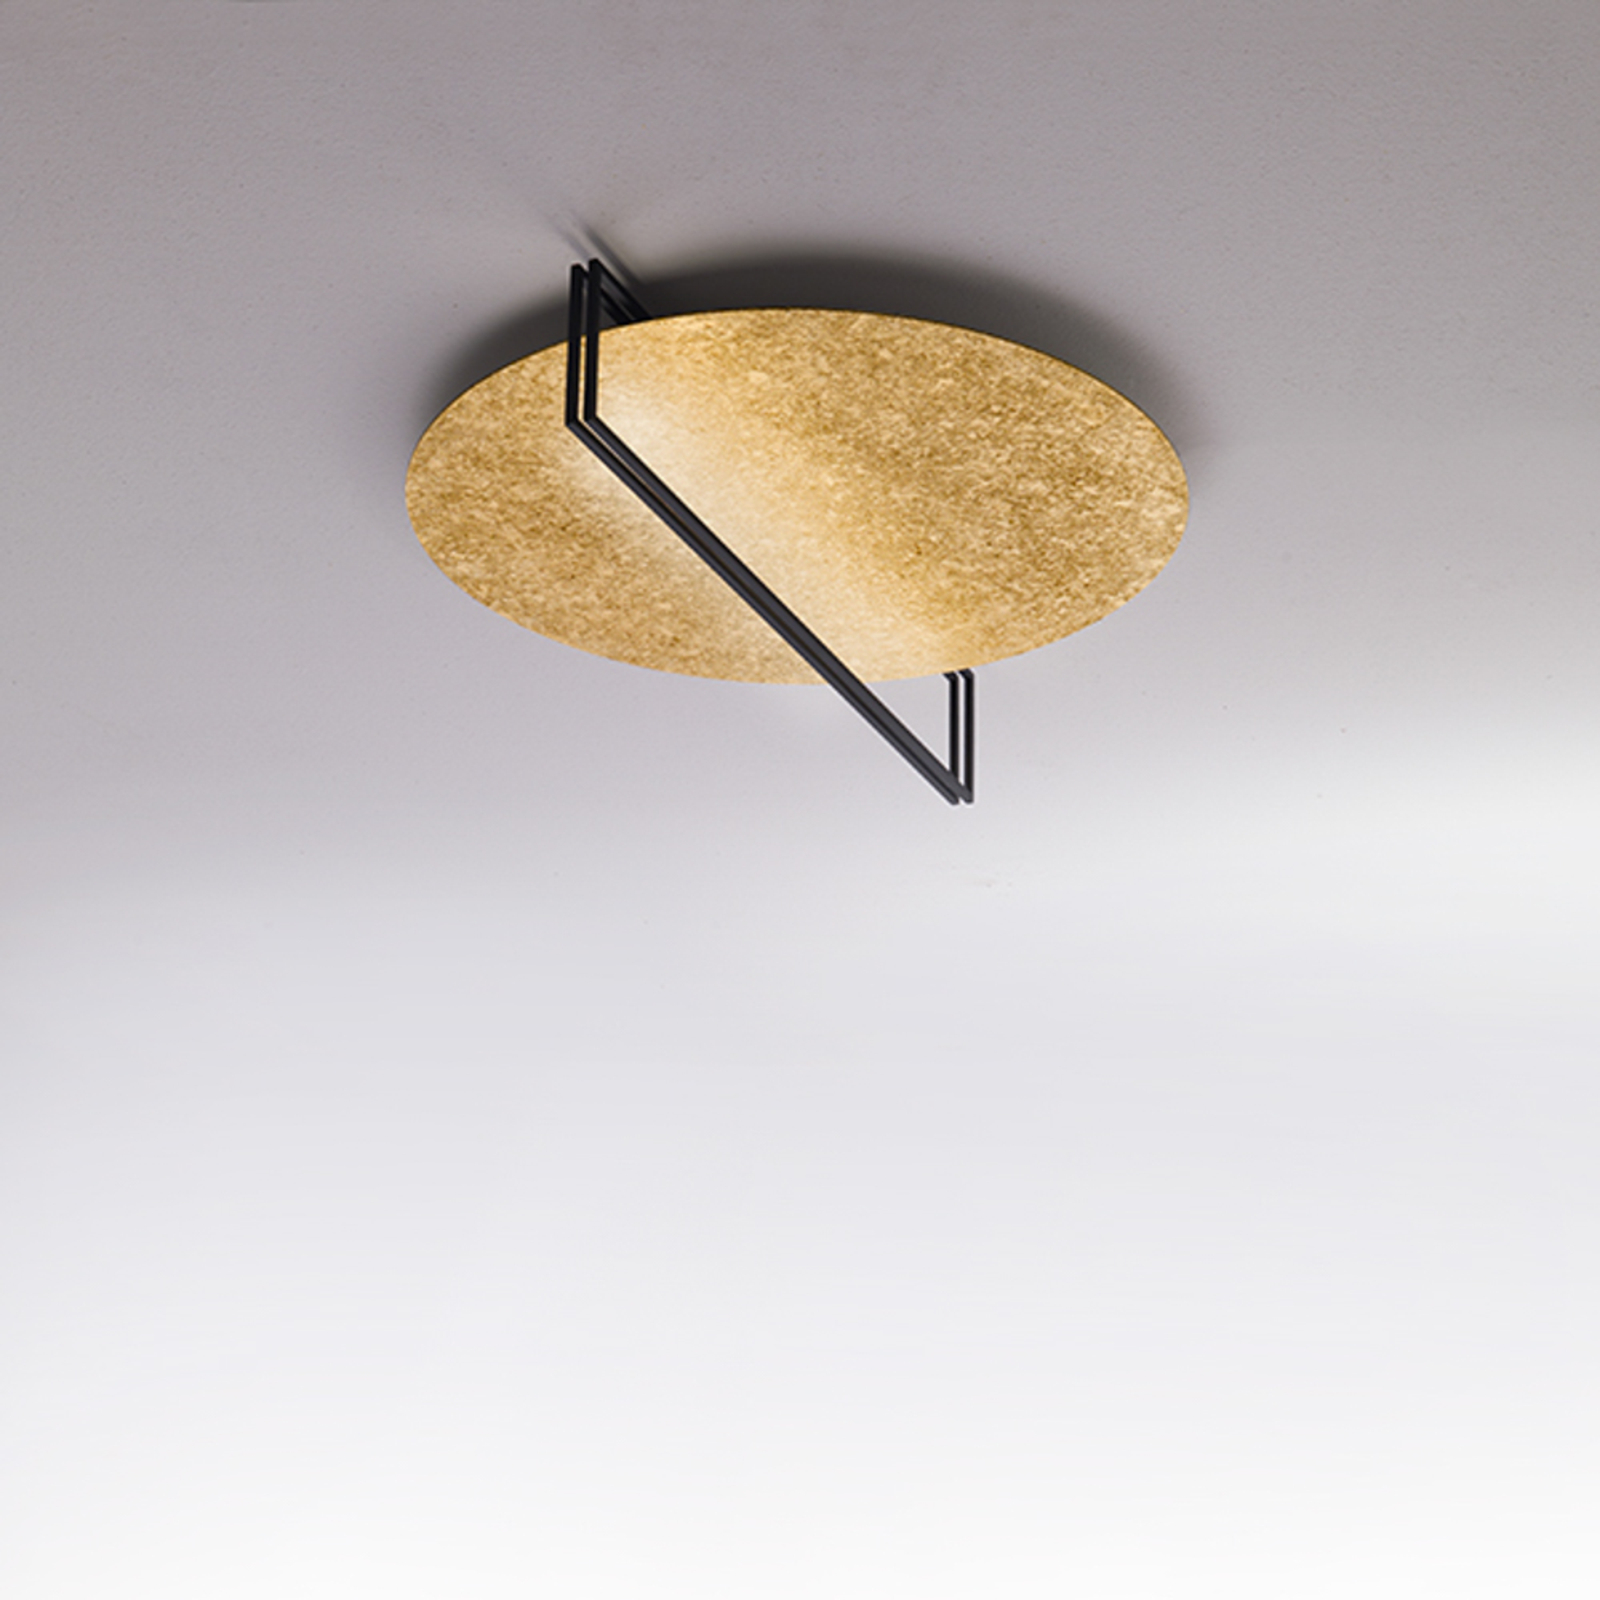 ICONE Essenza ceiling light 927 Ø47cm gold/black